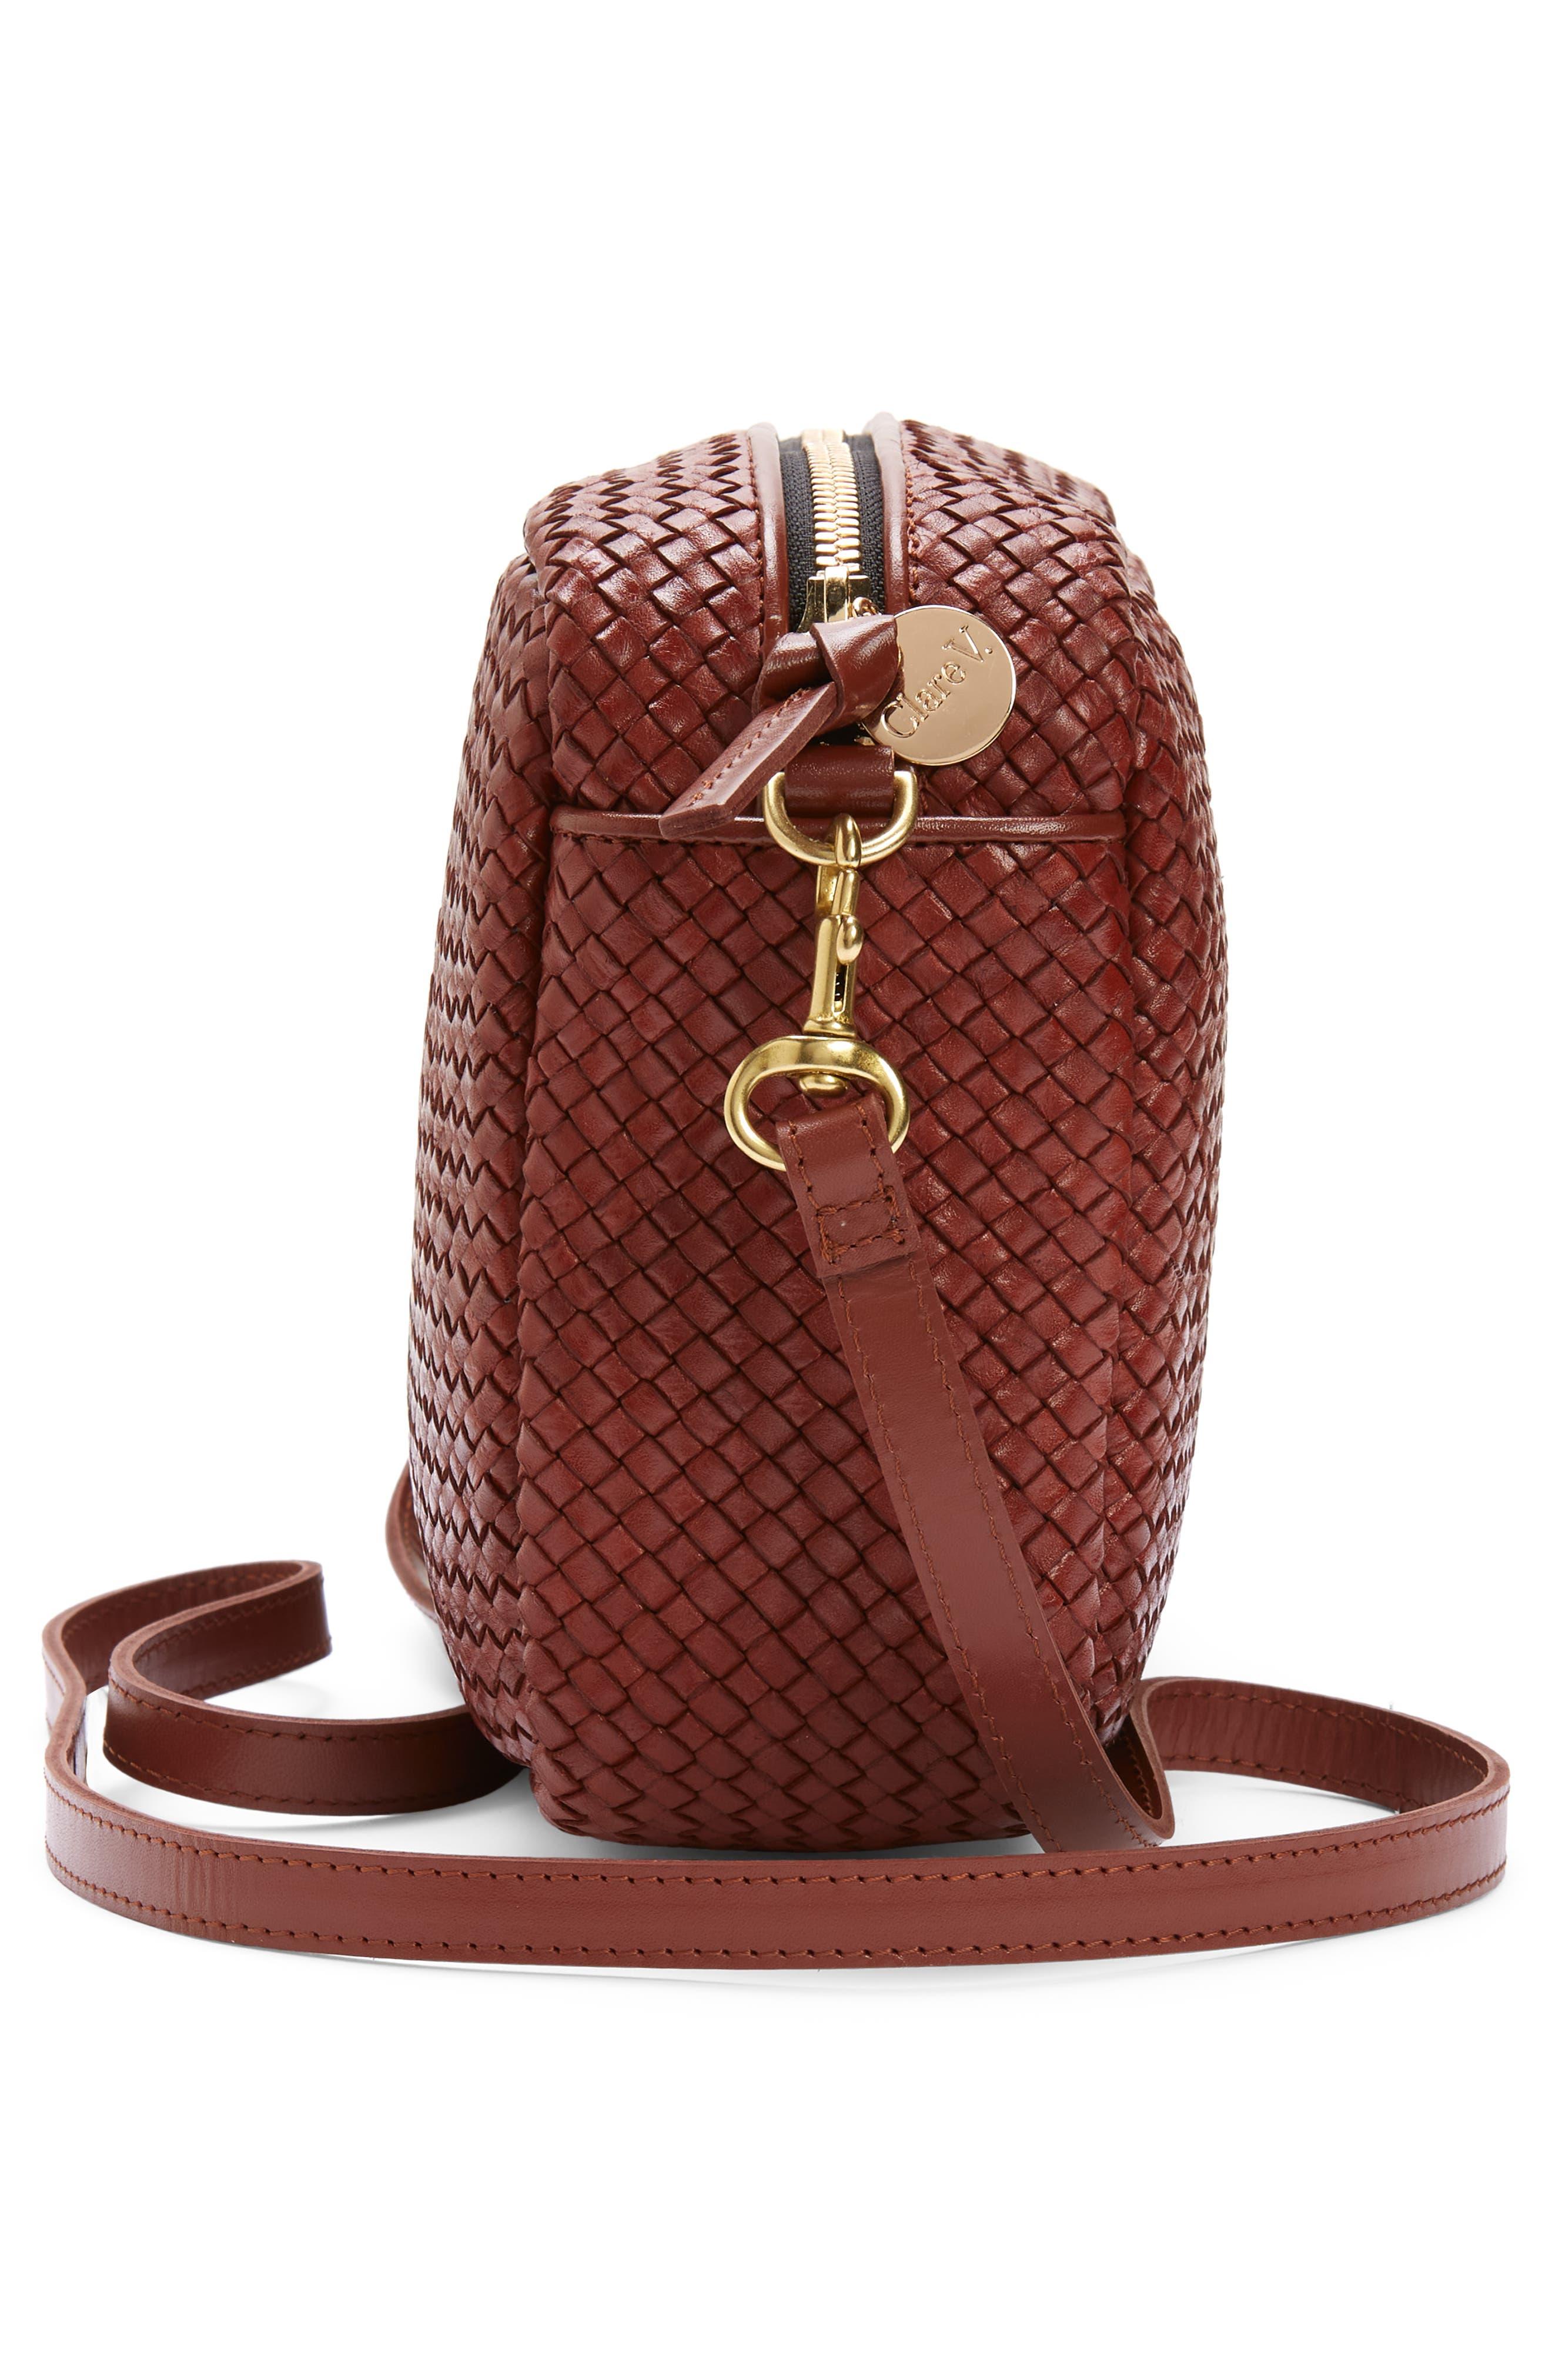 Clare V . Marisol Woven Leather Crossbody Bag, PINSTRIPE WOVEN CHECKER